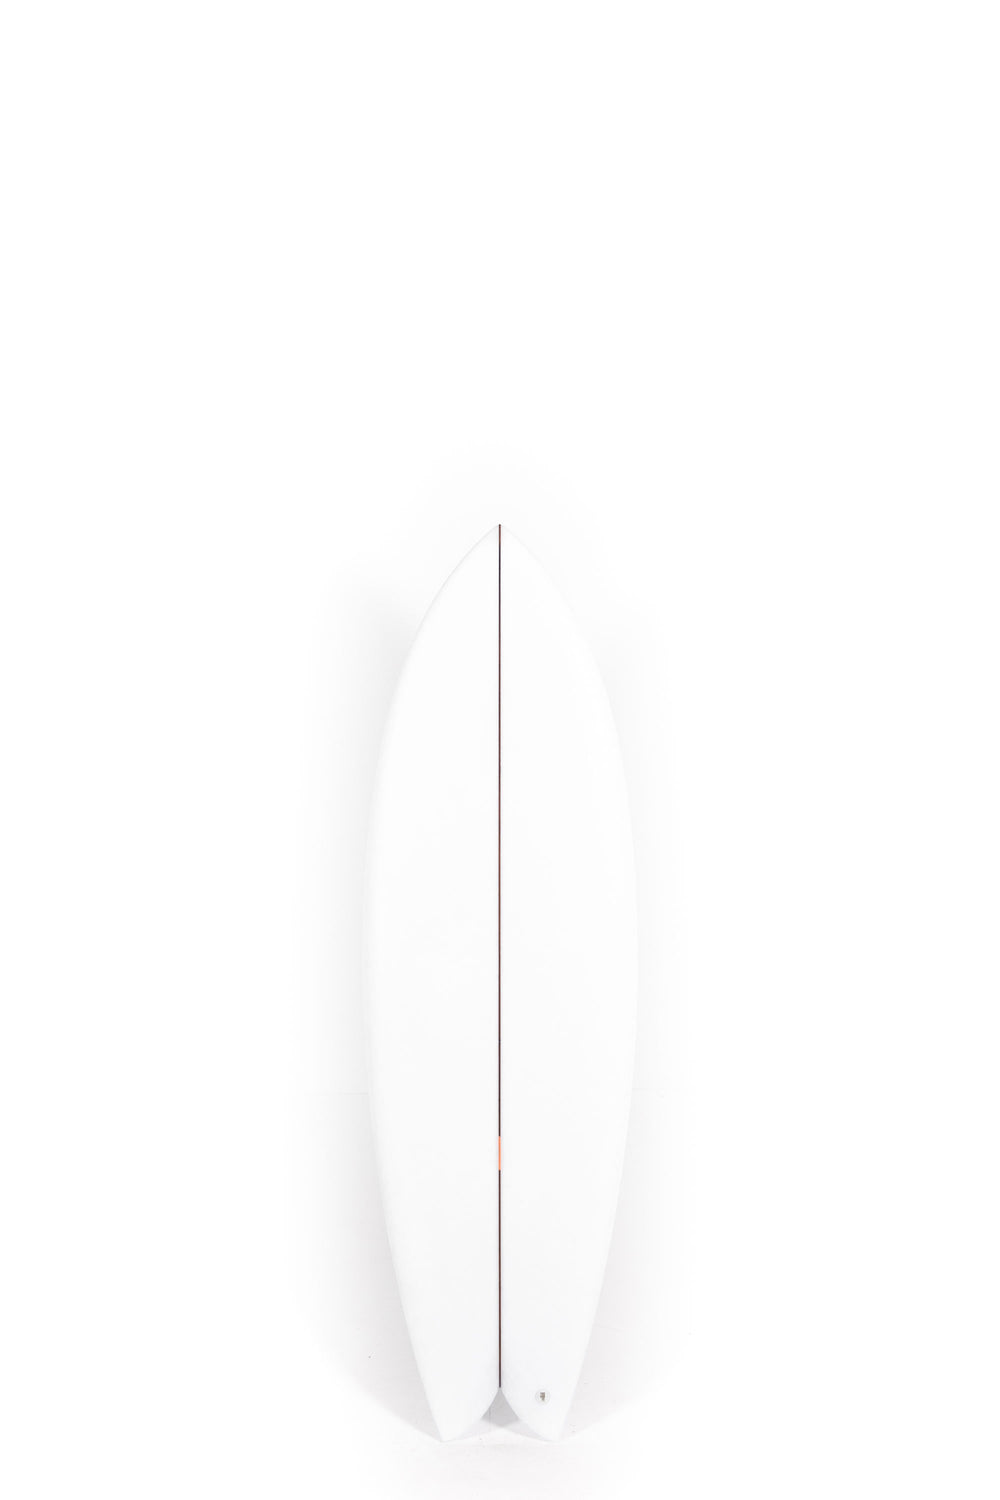 Pukas-Surf-Shop-Christenson-Surfboards-Nautilus-Chris-Christenson-5_8